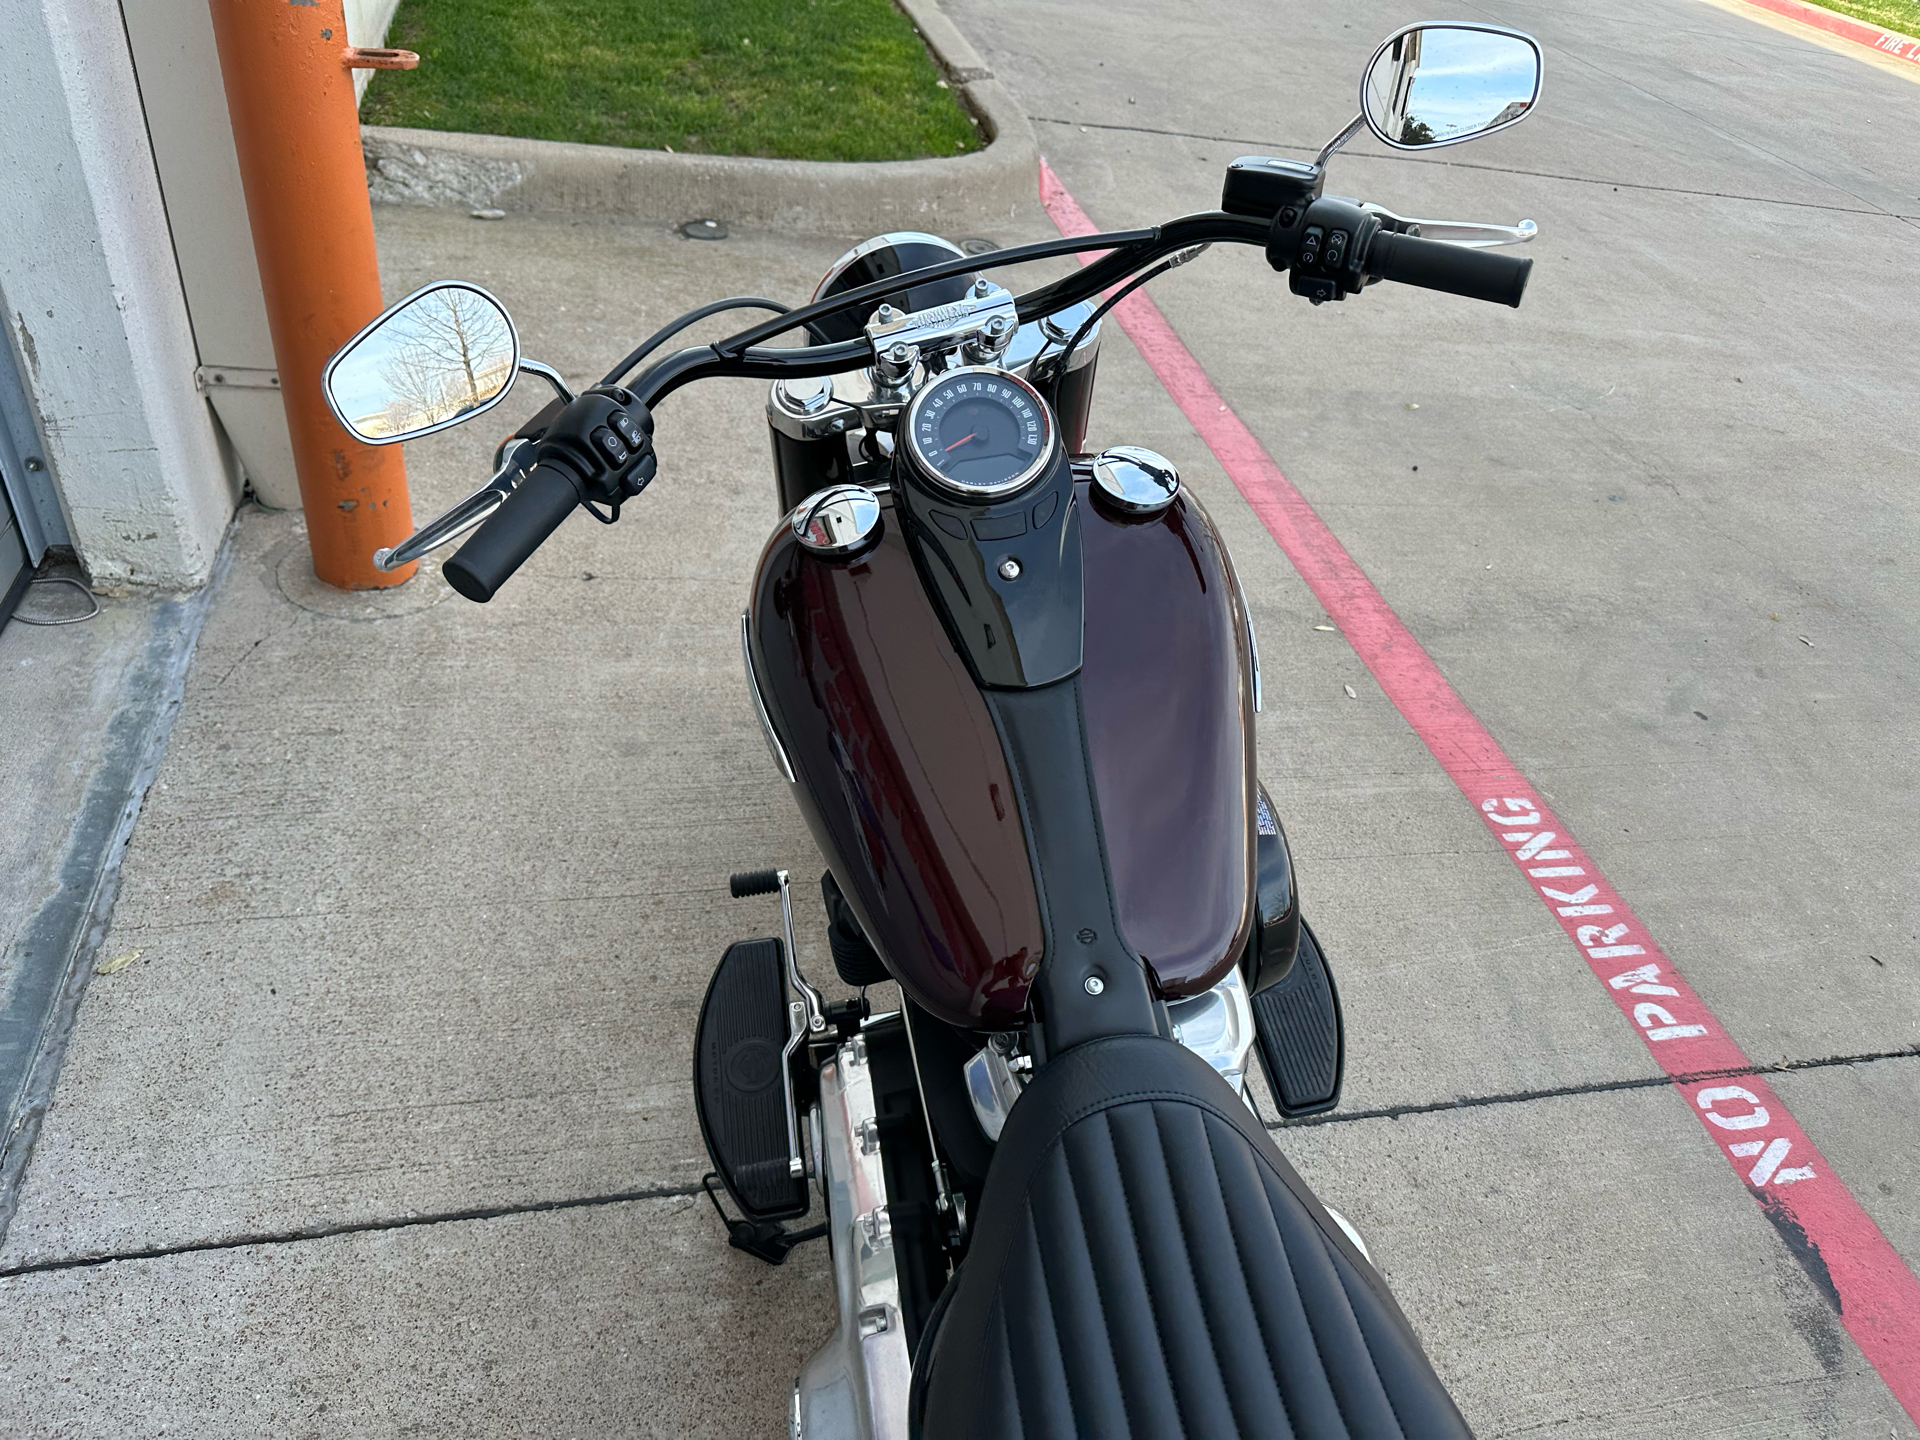 2021 Harley-Davidson Softail Slim® in Grand Prairie, Texas - Photo 6